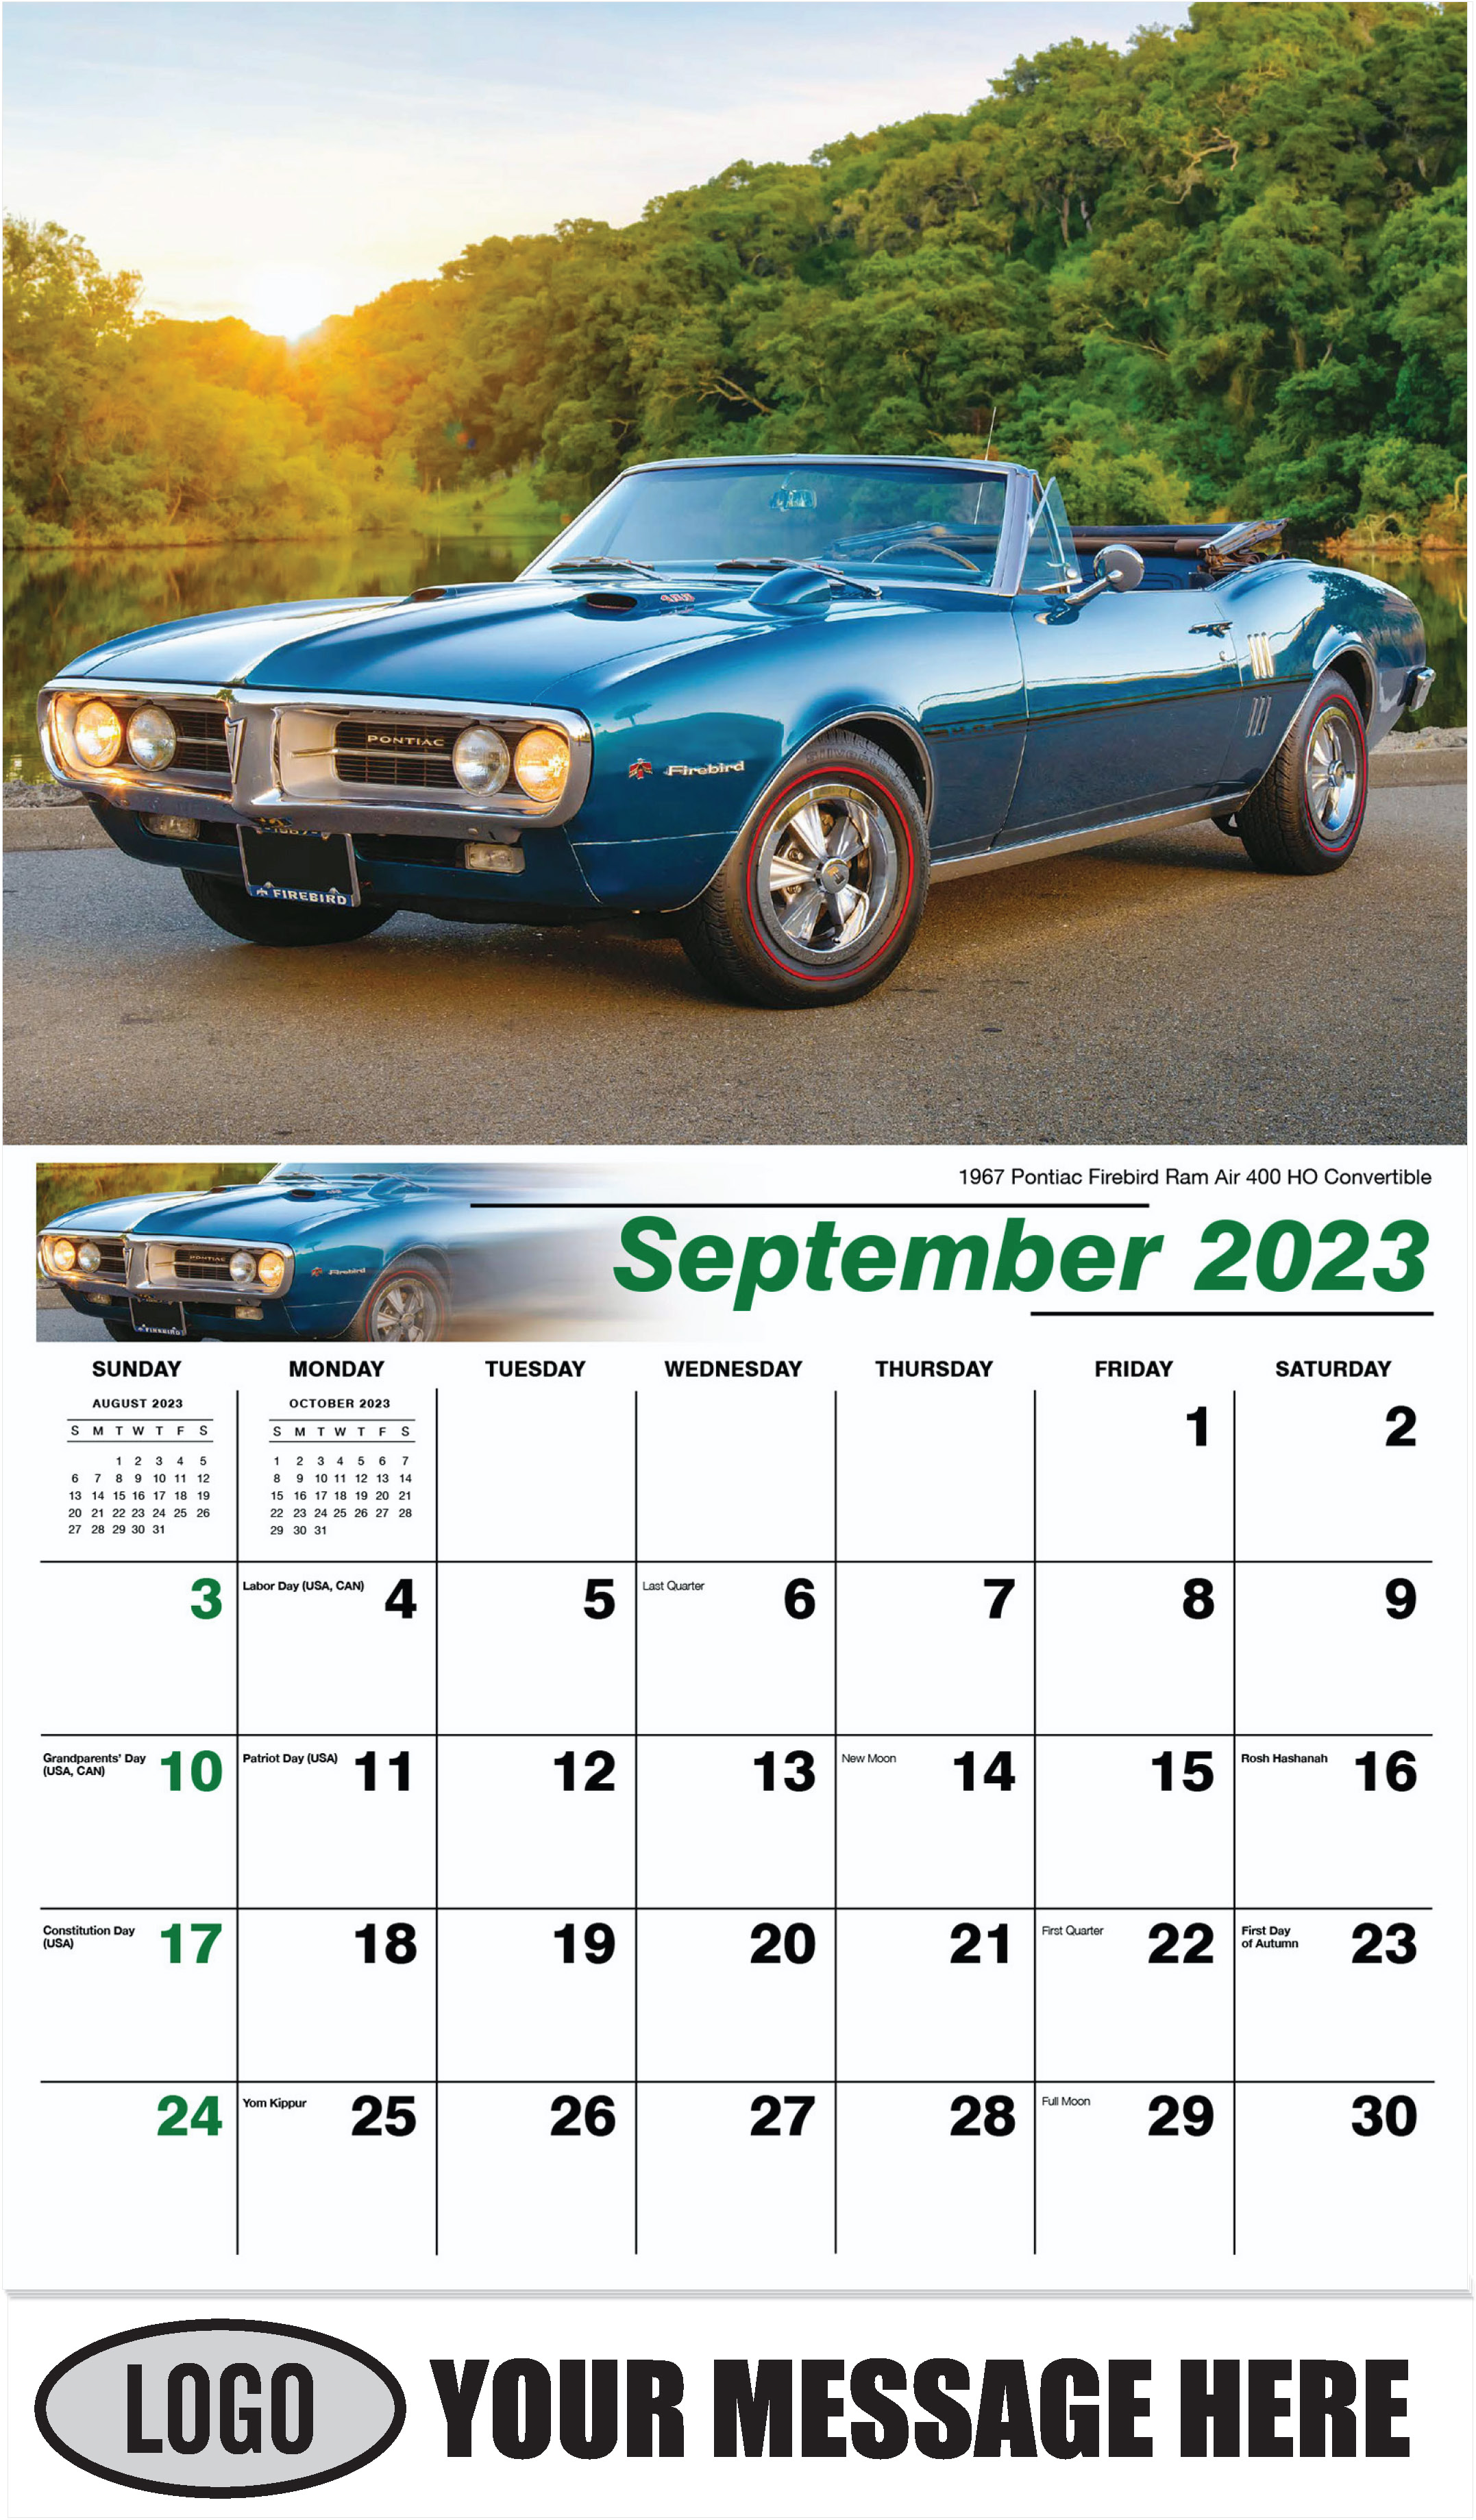 1967 Pontiac Firebird Ram Air 400 HO Convertible - September - Classic Cars 2023 Promotional Calendar